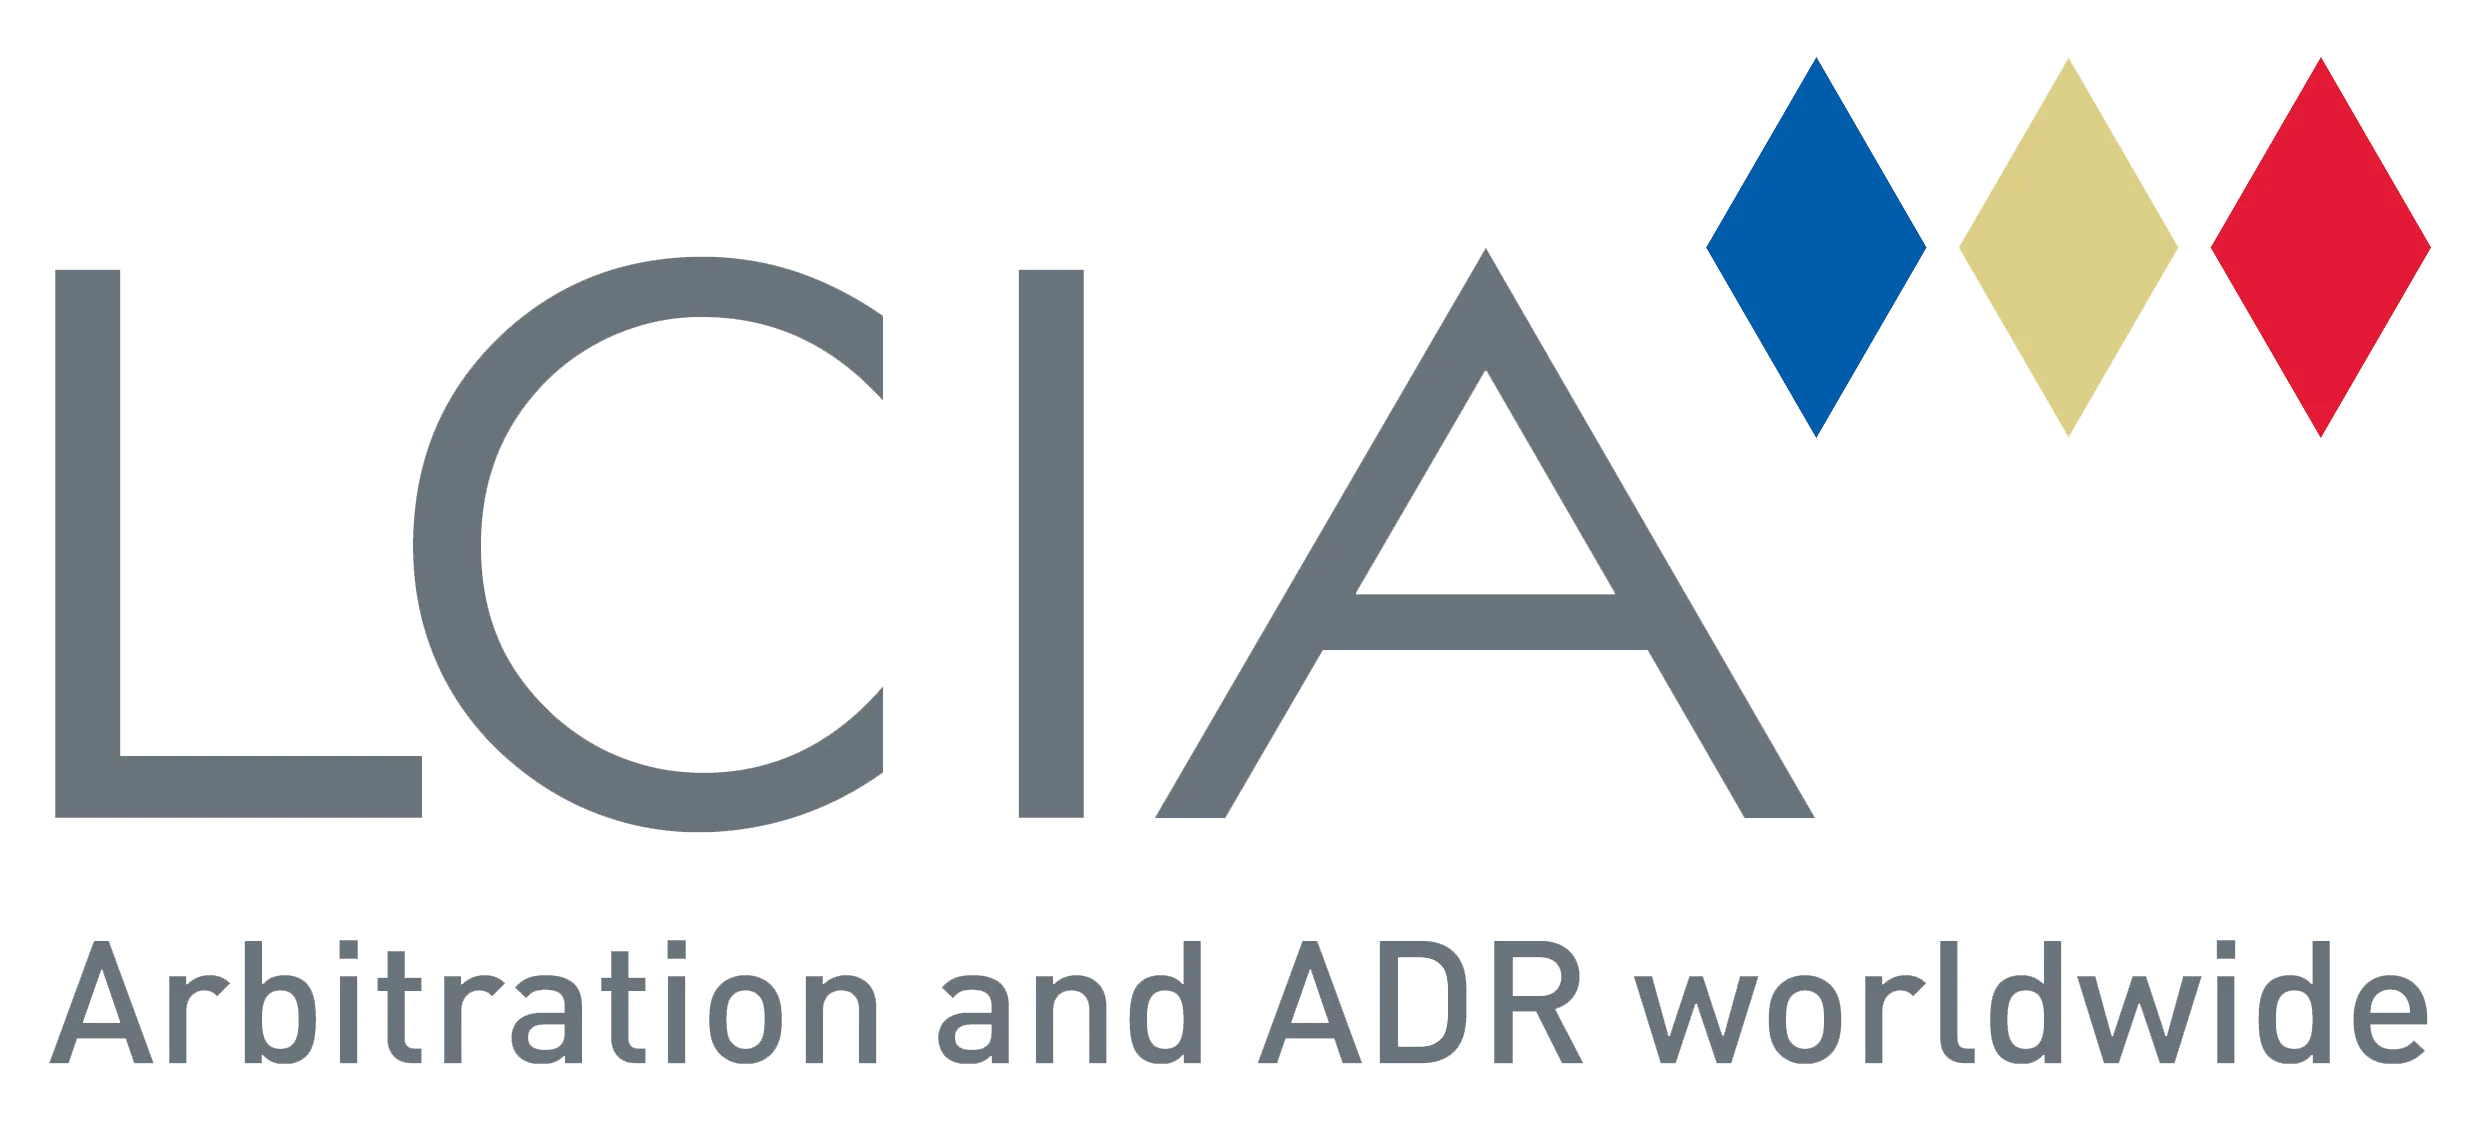 LCIA Arbitration and ADR worldwide logo